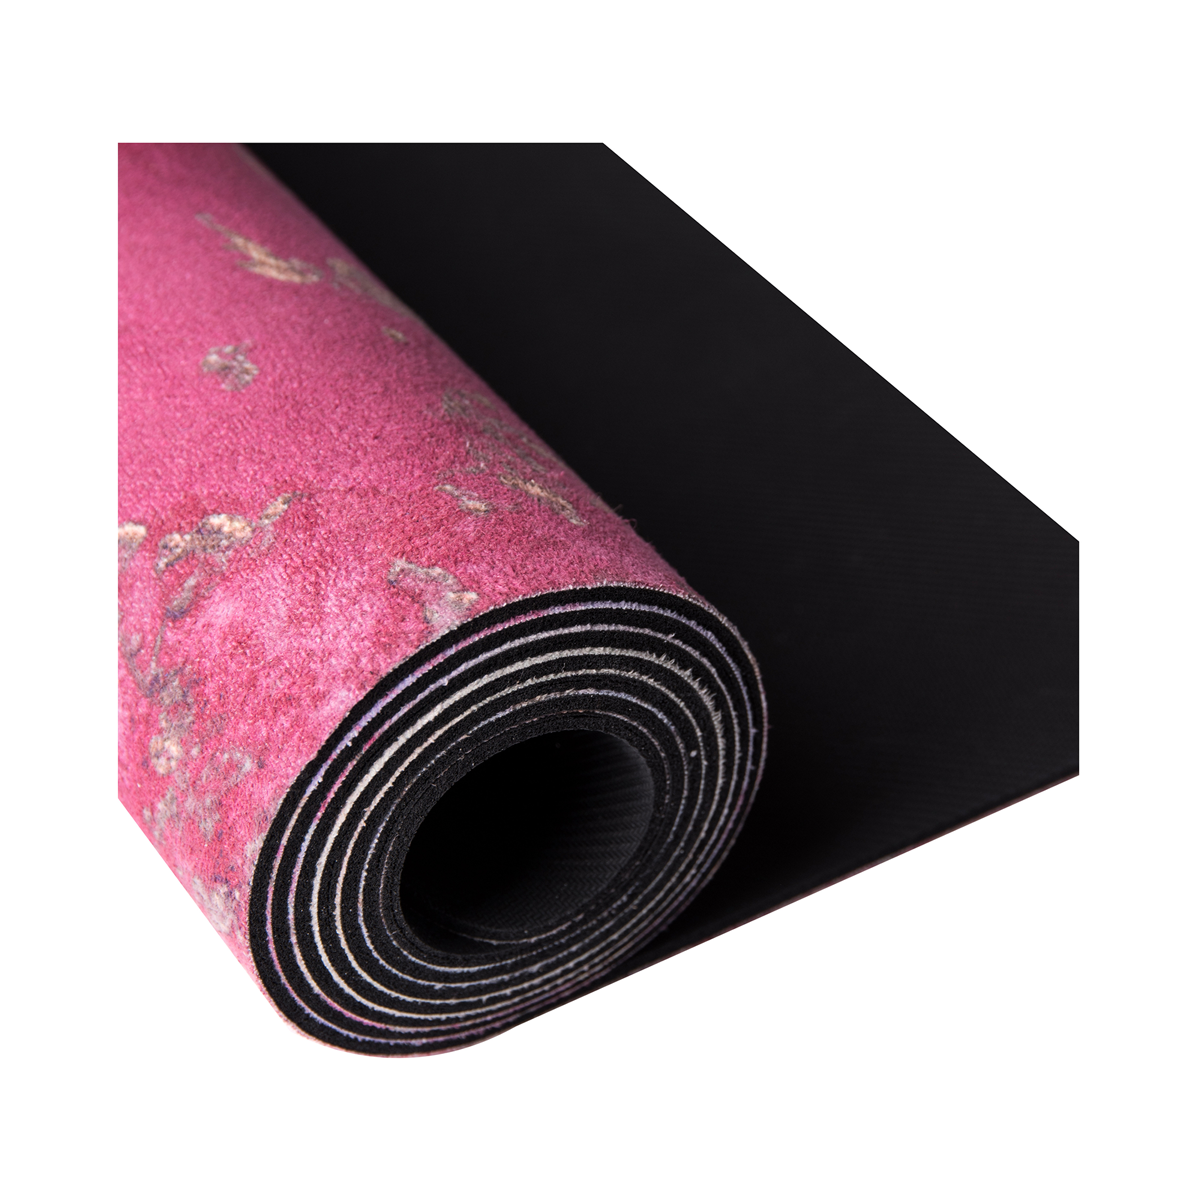 Yoga mat 3mm